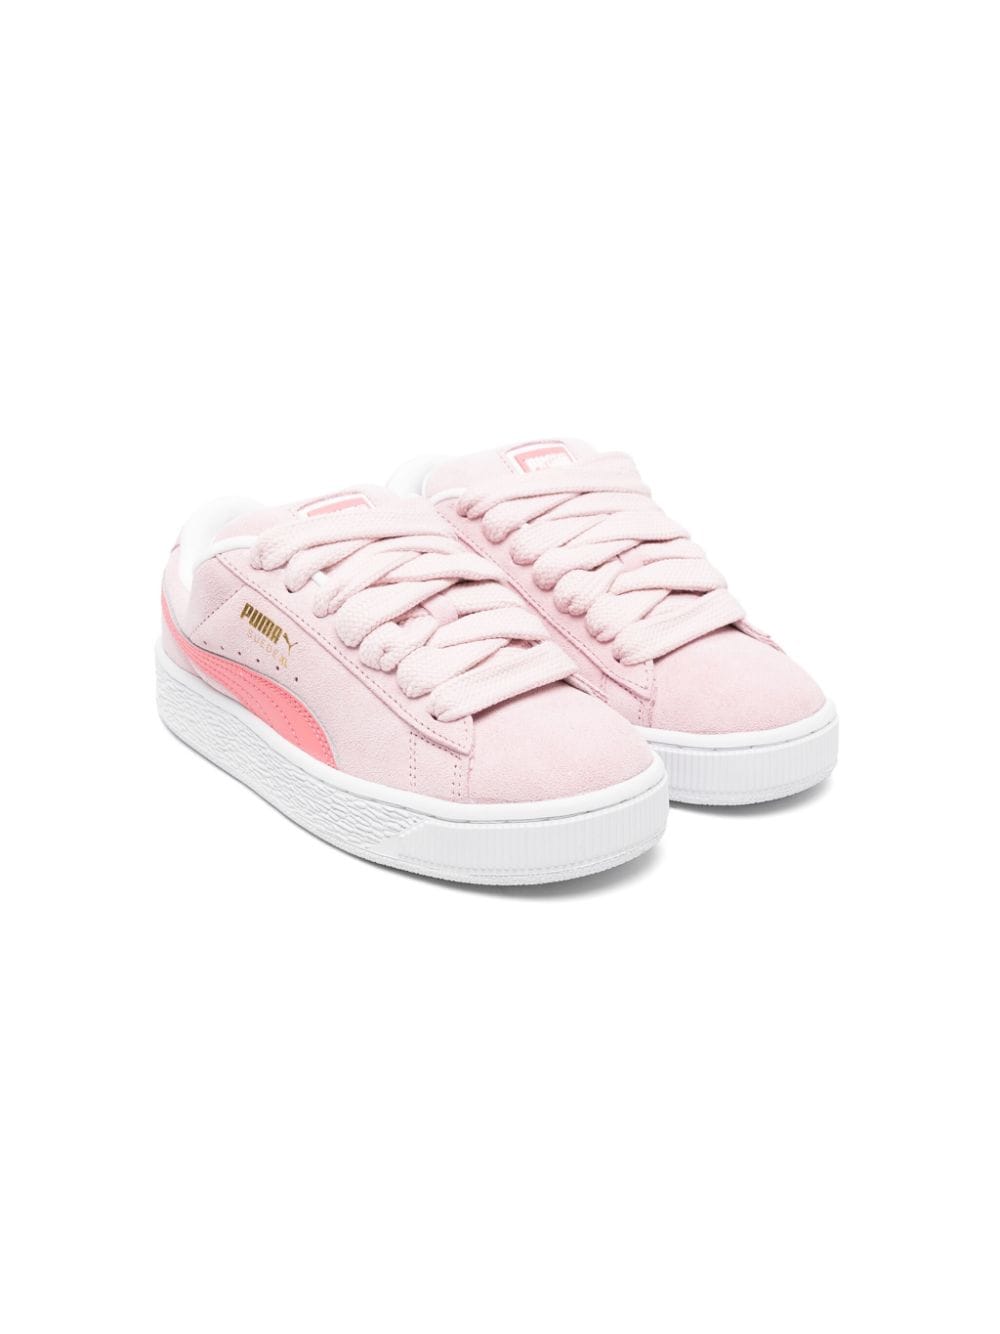 Puma Kids XL suede sneakers Pink